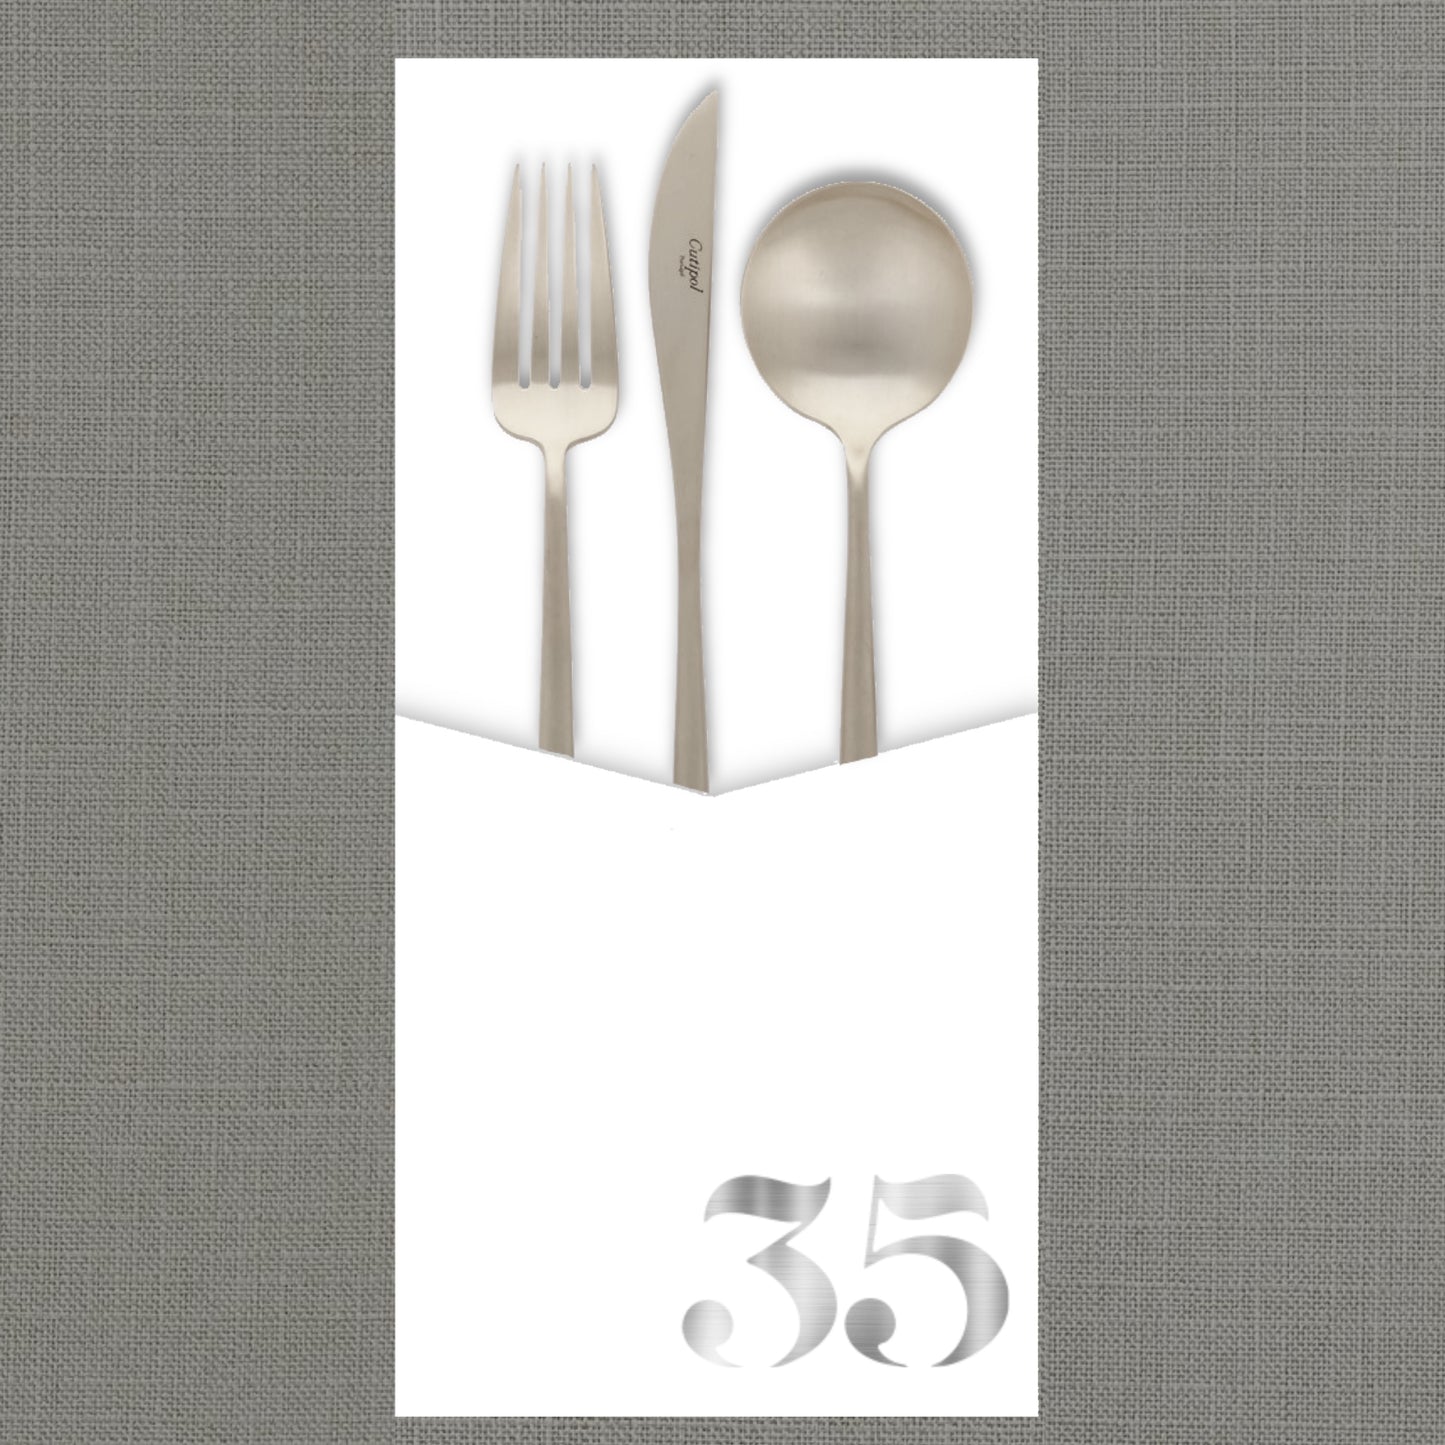 Foil Celebrate! 35 - Cutlery Pouch